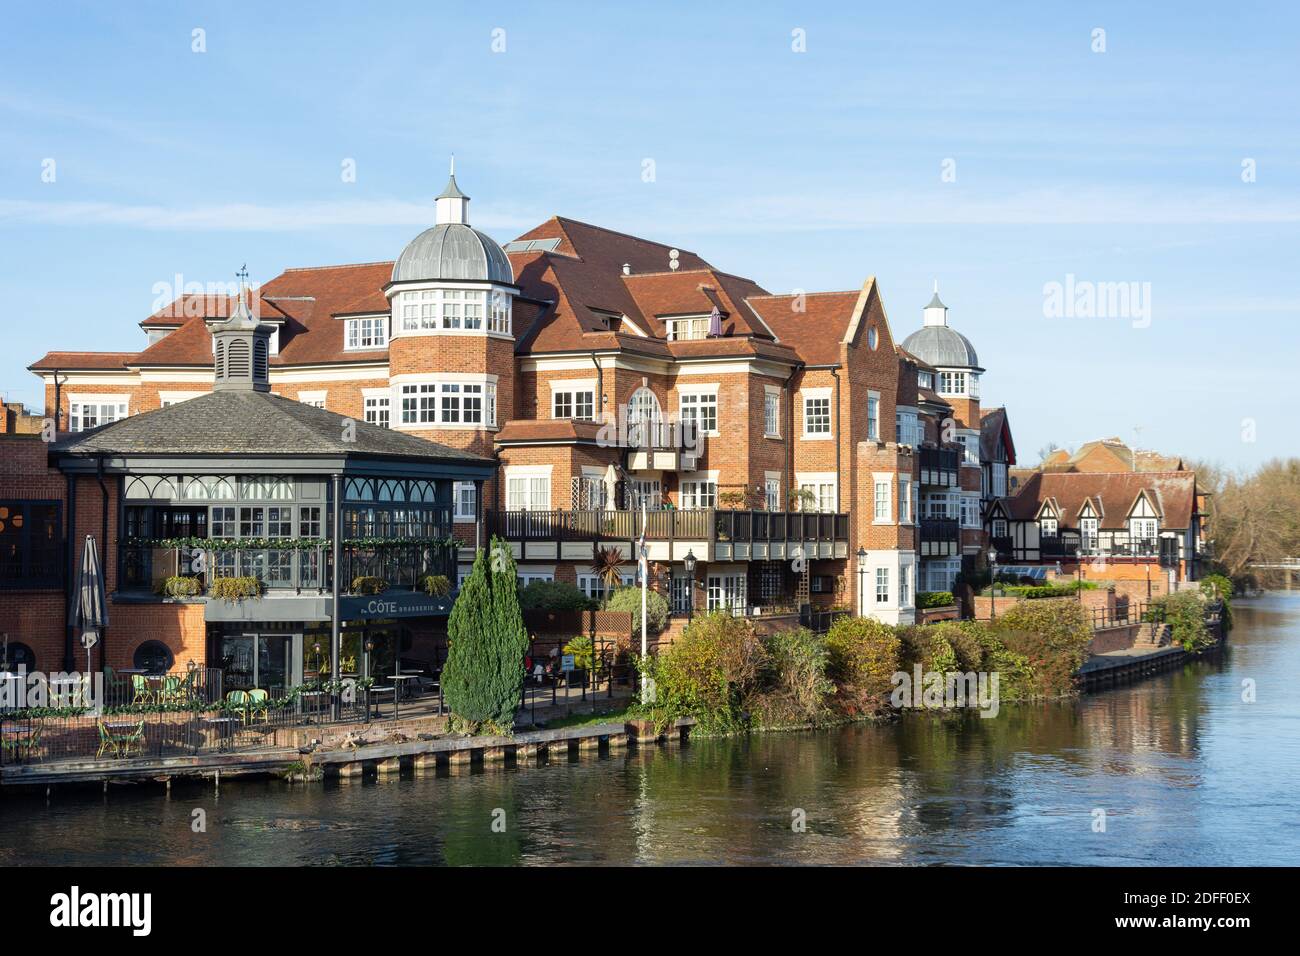 Cote Brasserie restaurant across River Thames, Eton, Berkshire, England, United Kingdom Stock Photo